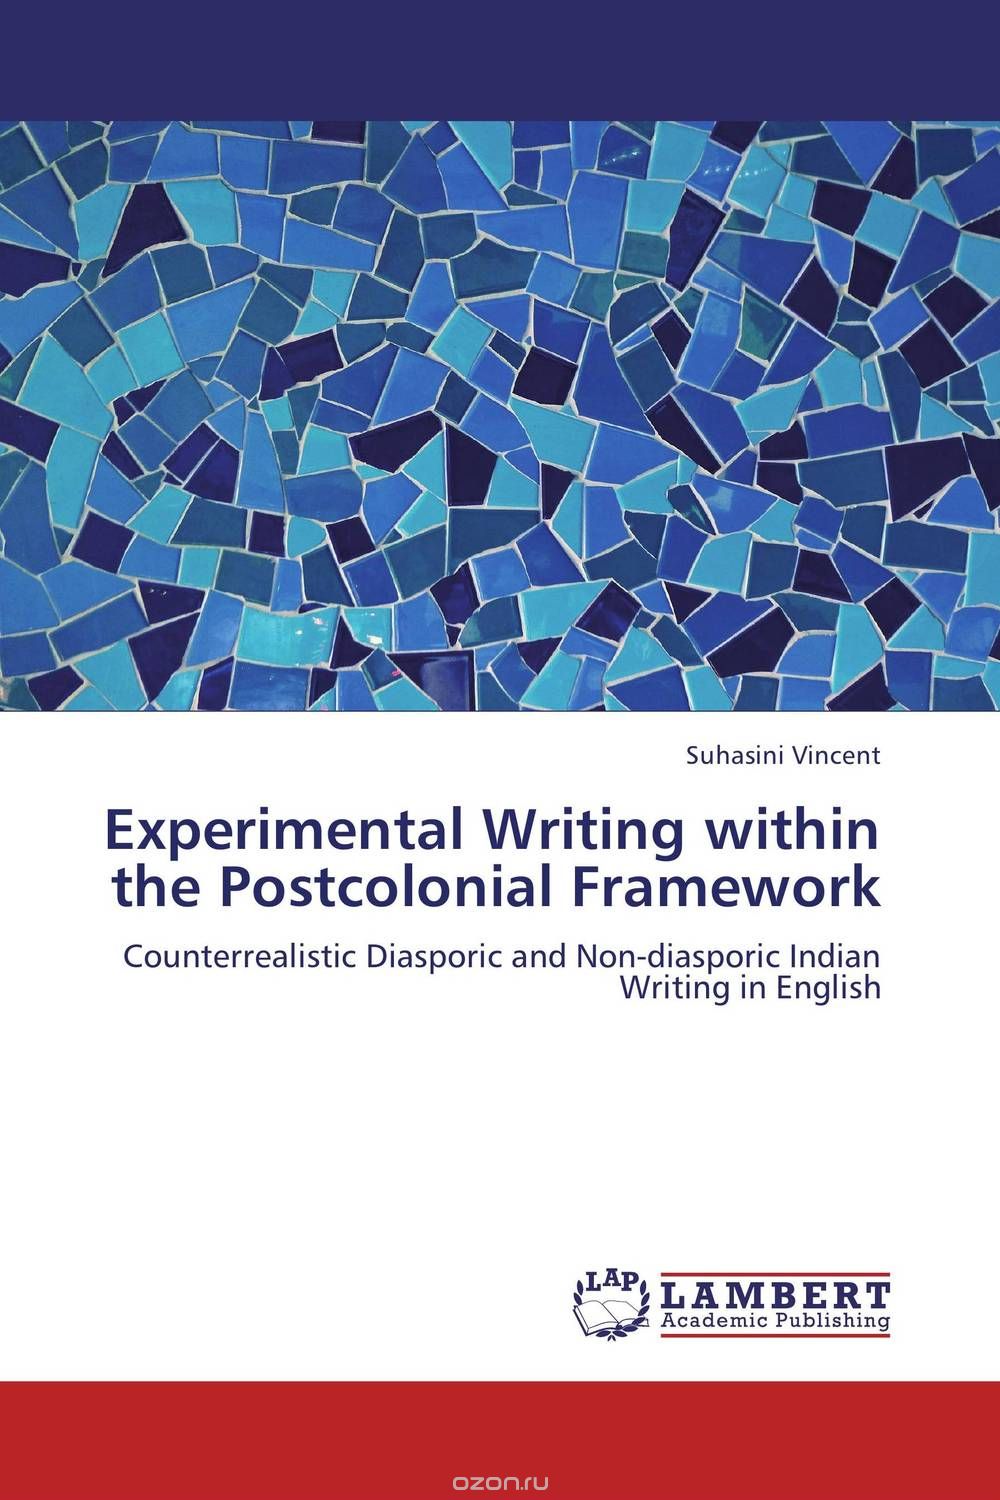 Скачать книгу "Experimental Writing within the Postcolonial Framework"